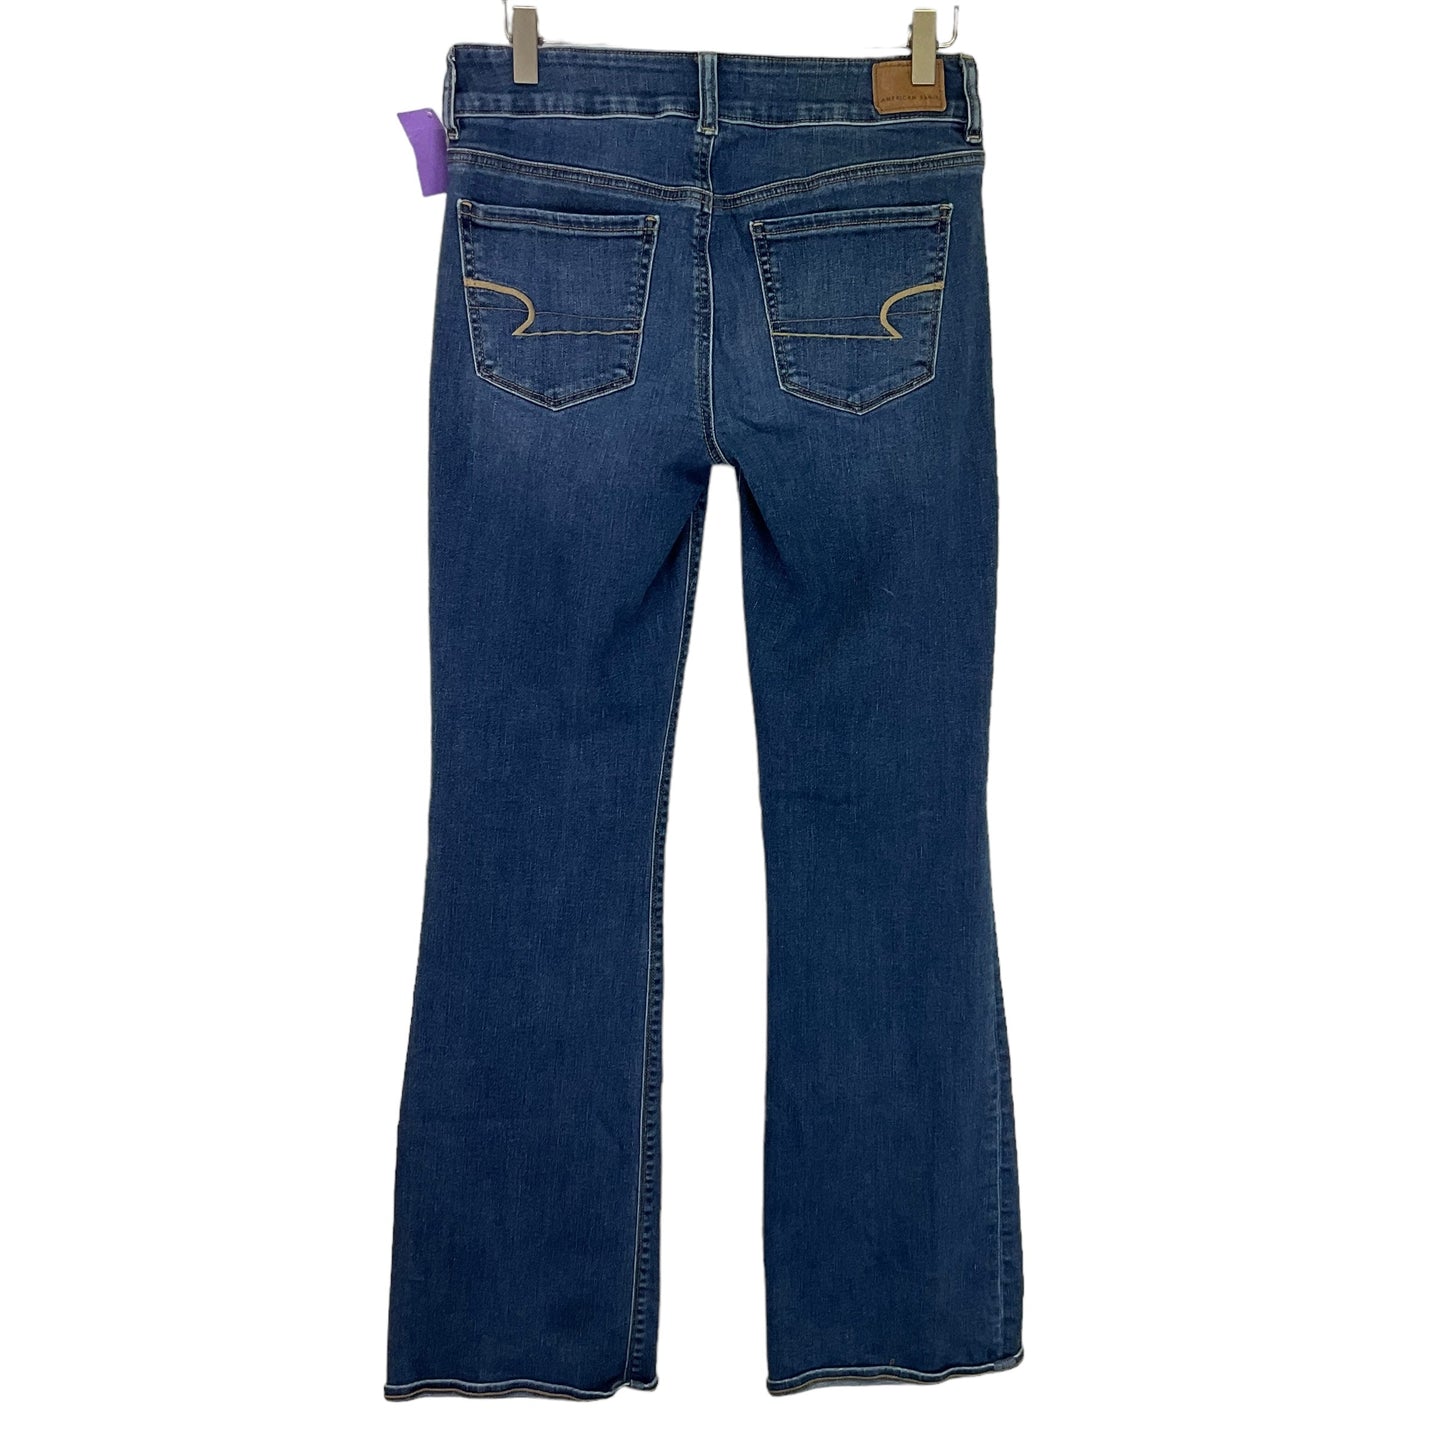 Blue Denim Jeans Boot Cut American Eagle, Size 8